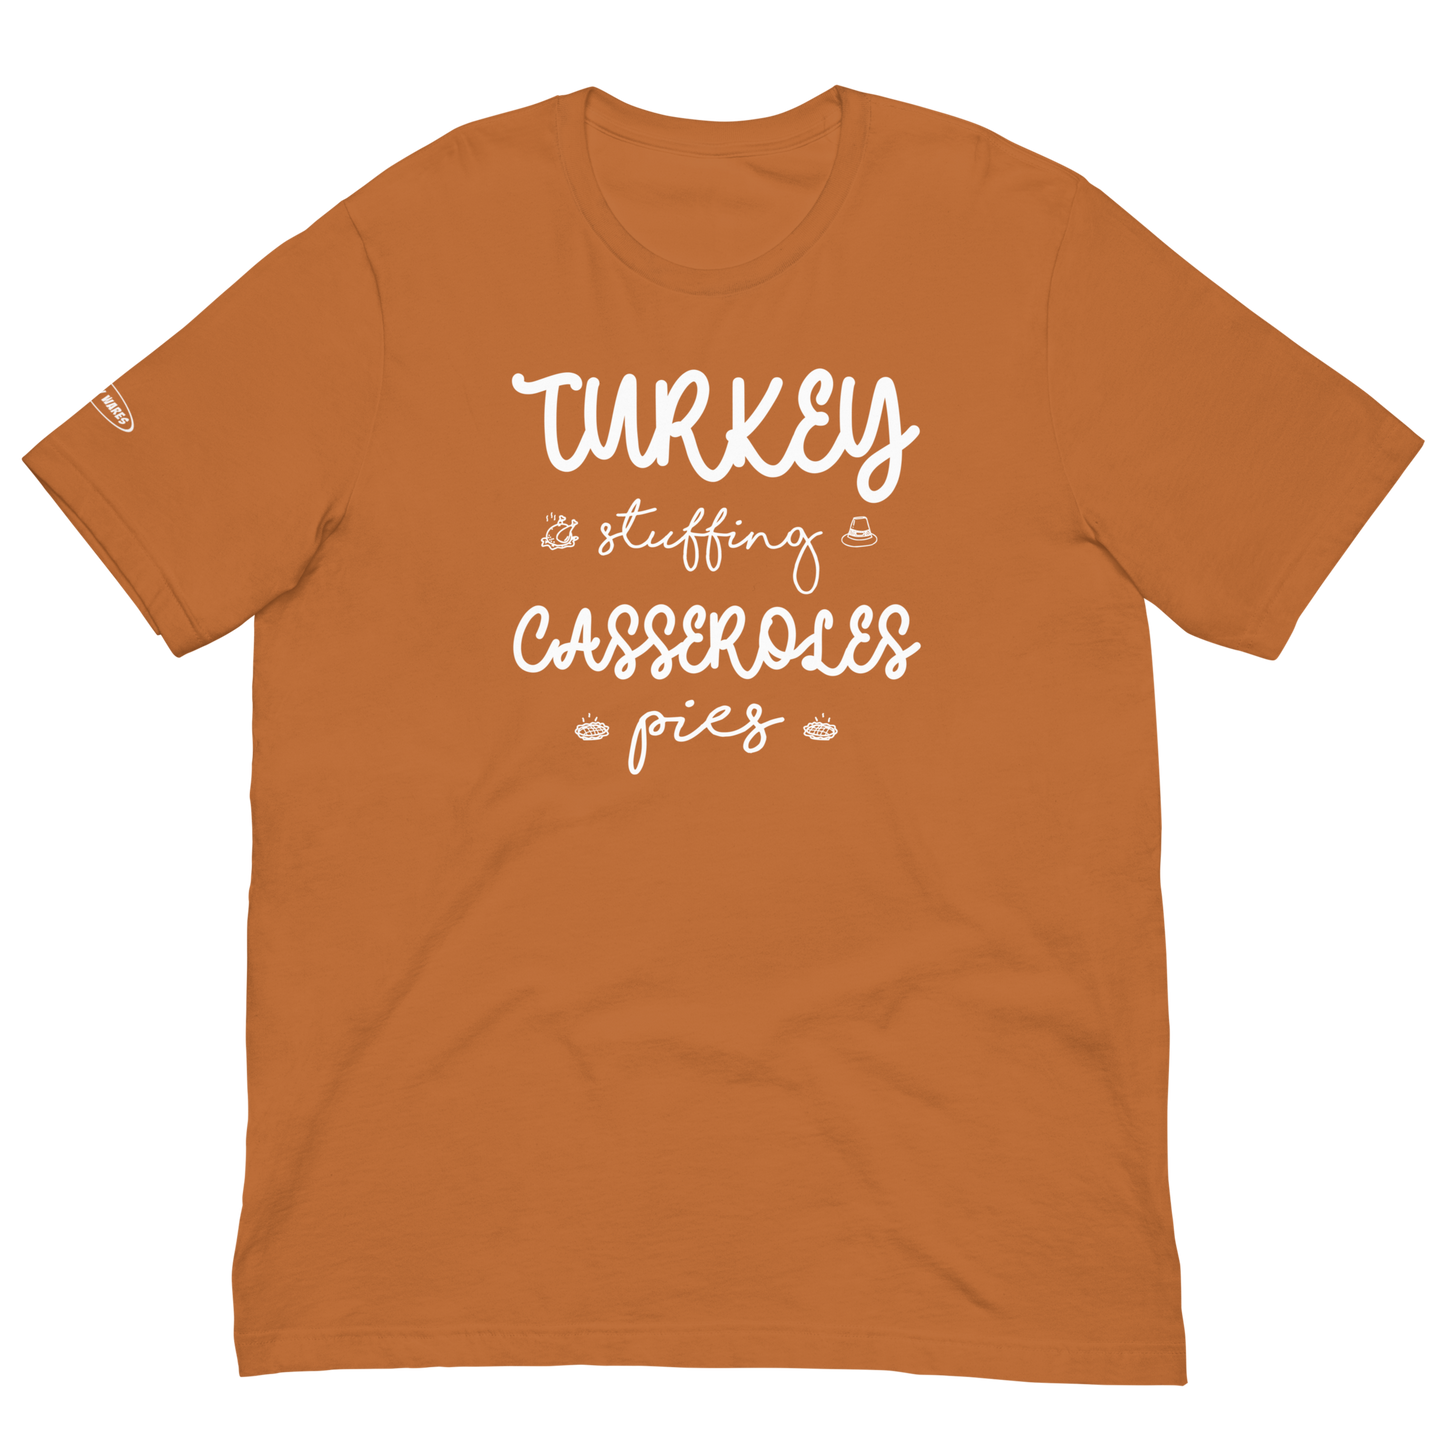 Fall Turkey, Stuffing, Casseroles, Pies - T-shirt